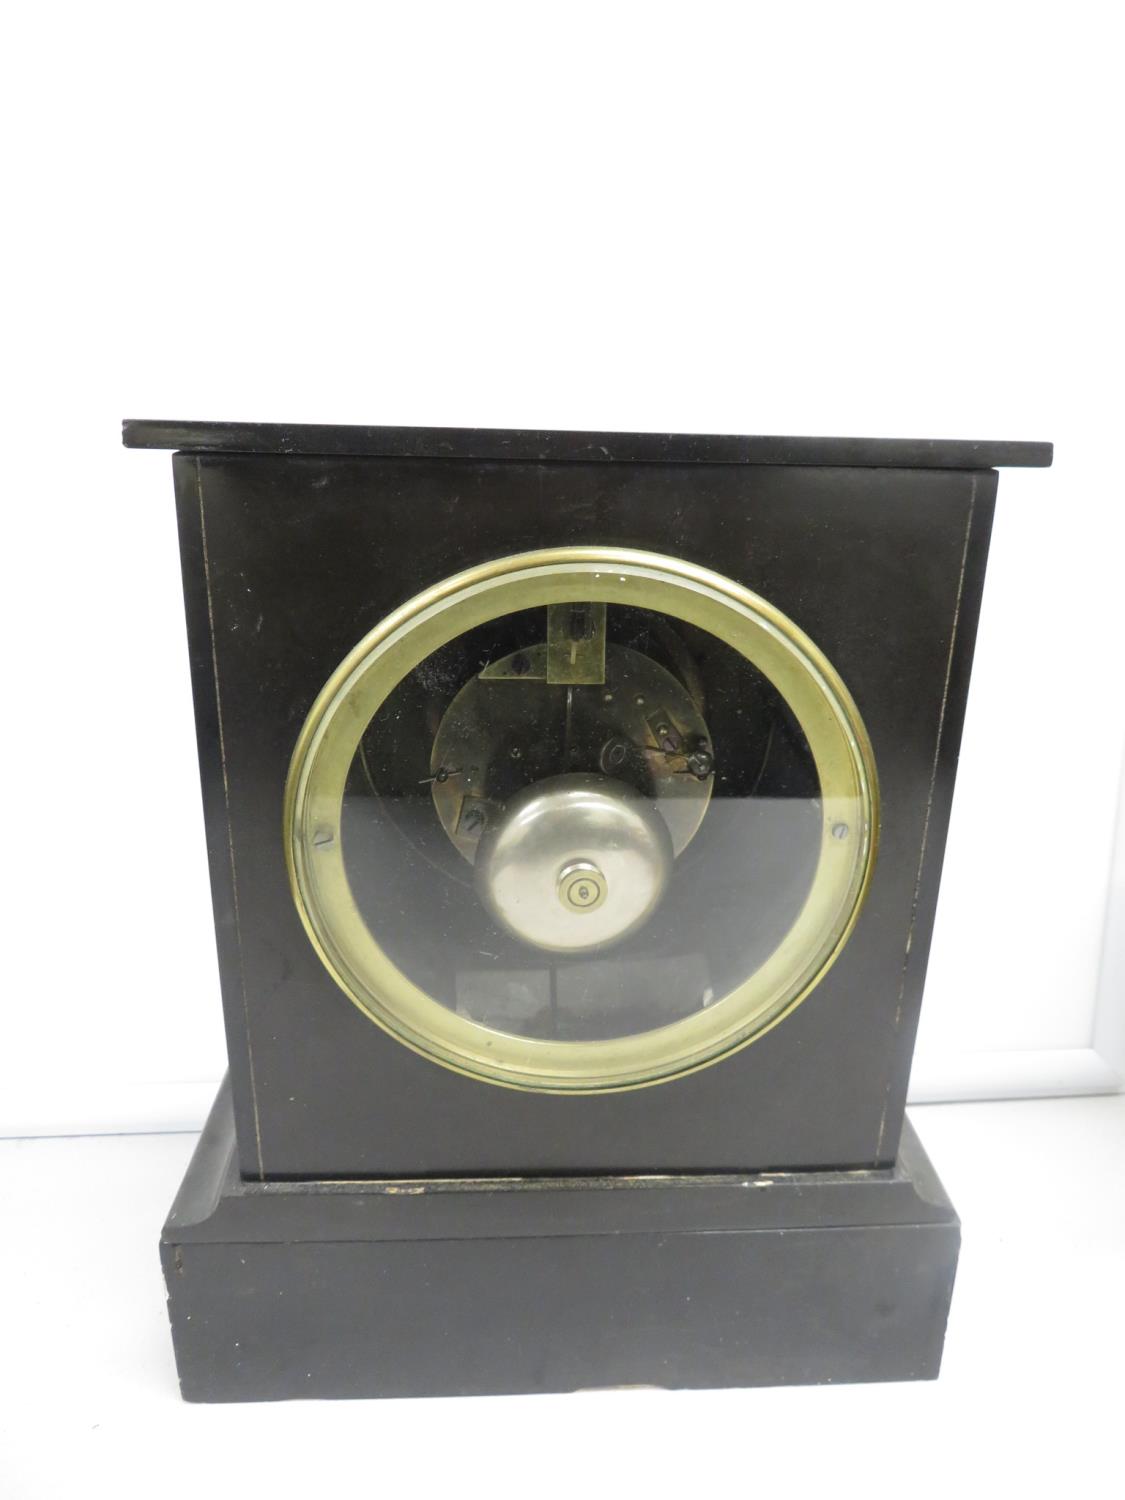 13" high 6" dial Breguet mantle clock - clock runs - Image 3 of 3